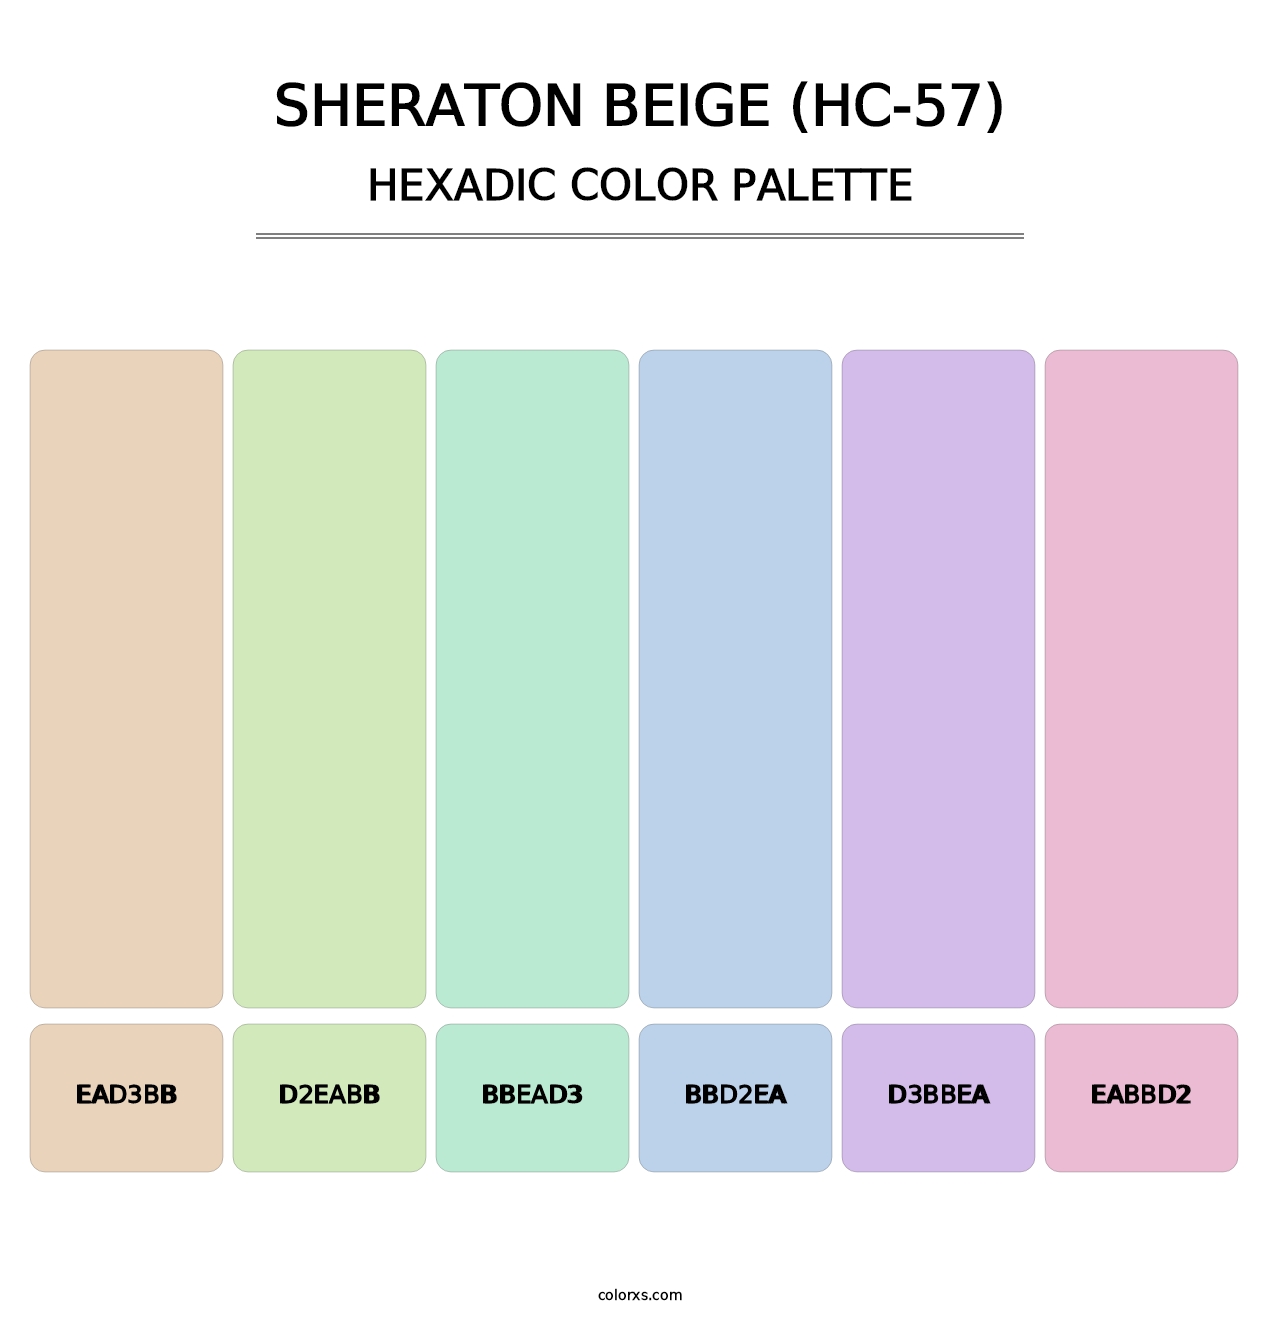 Sheraton Beige (HC-57) - Hexadic Color Palette